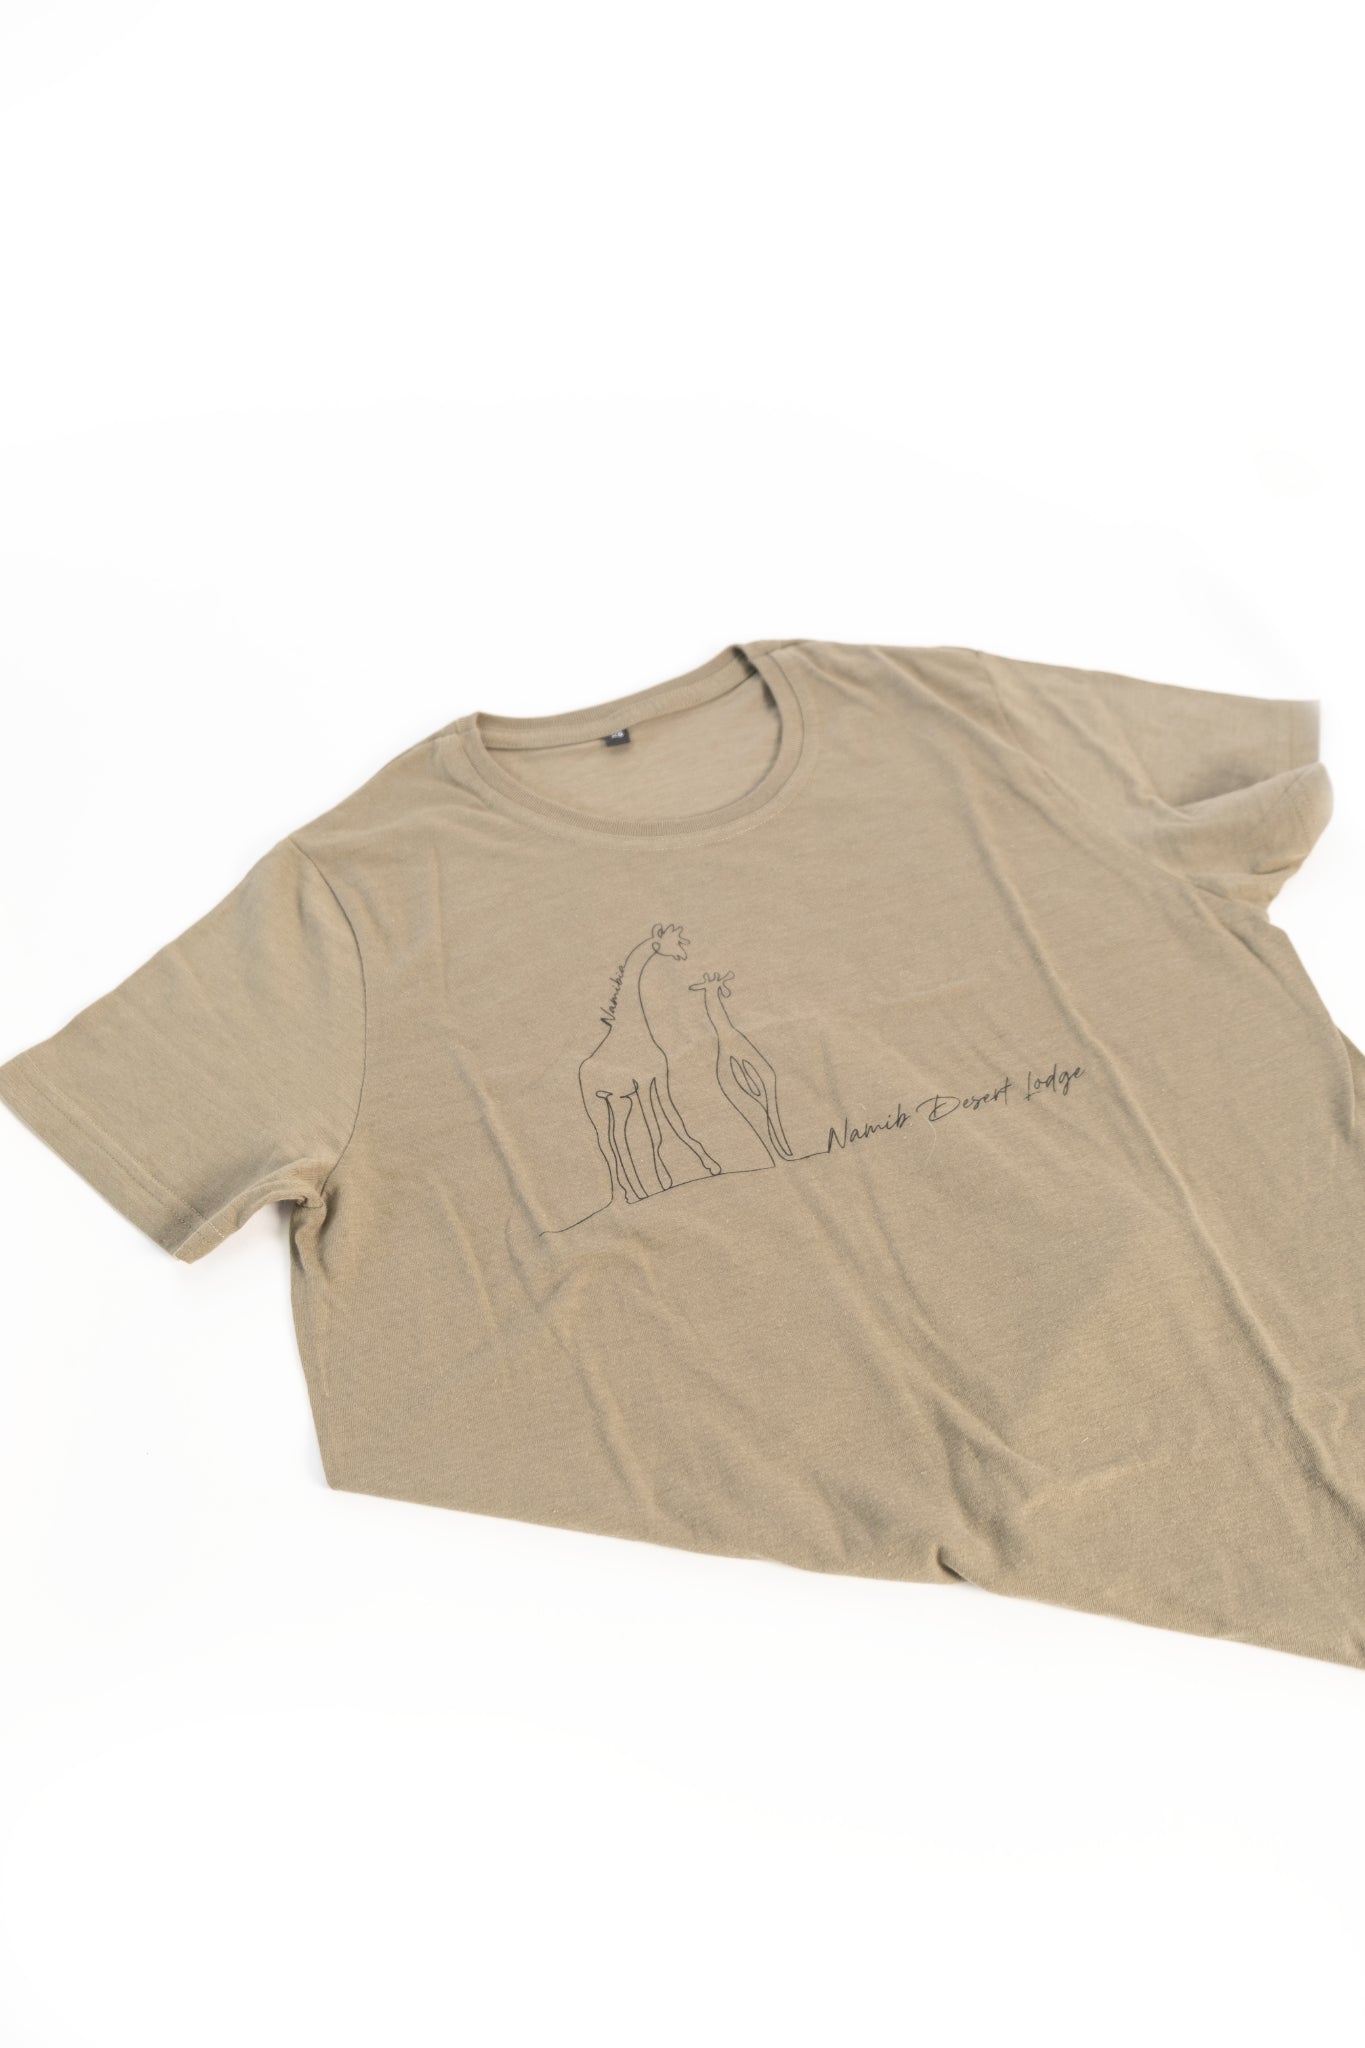 Namibie Cam Merch - T-shirt Girafe